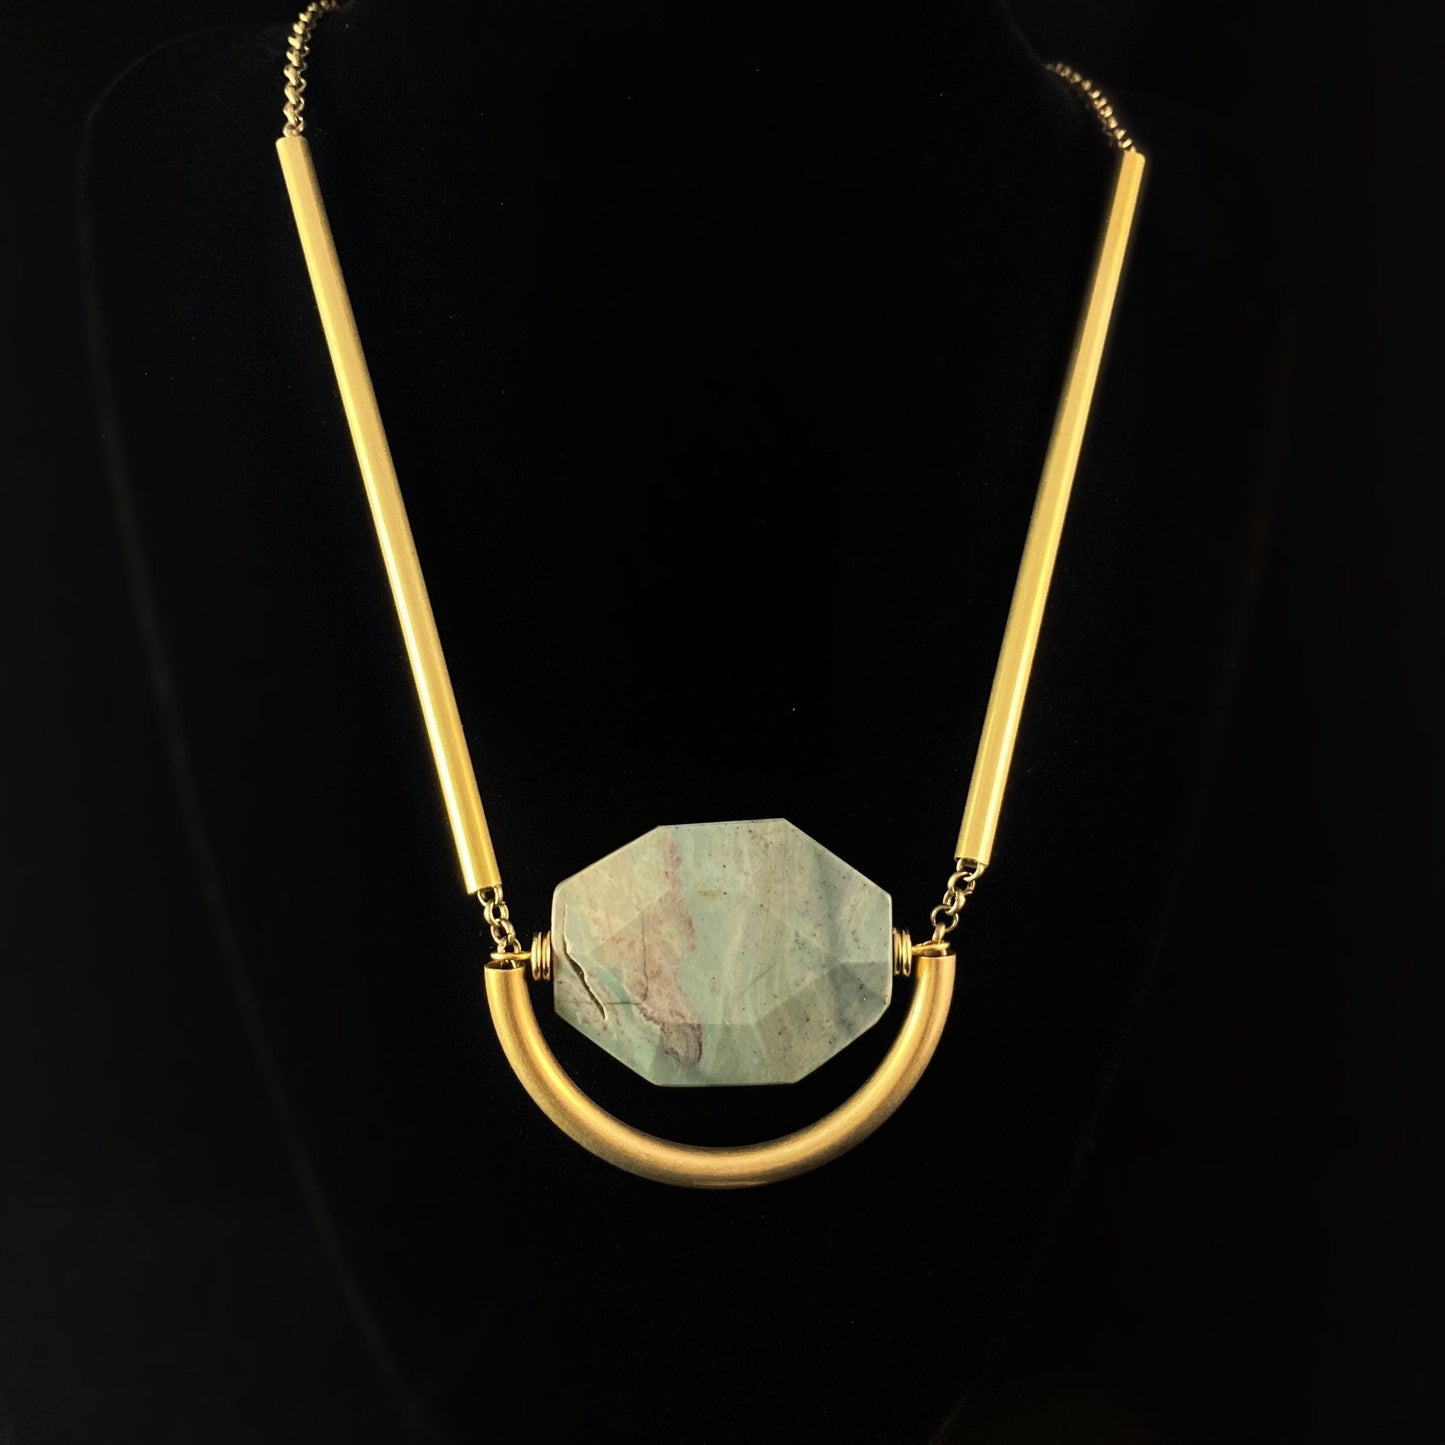 Gold Geometric Art Deco Pendant Necklace - 18kt Gold Necklace with Large Jasper Statement Stone, David Aubrey Jewelry